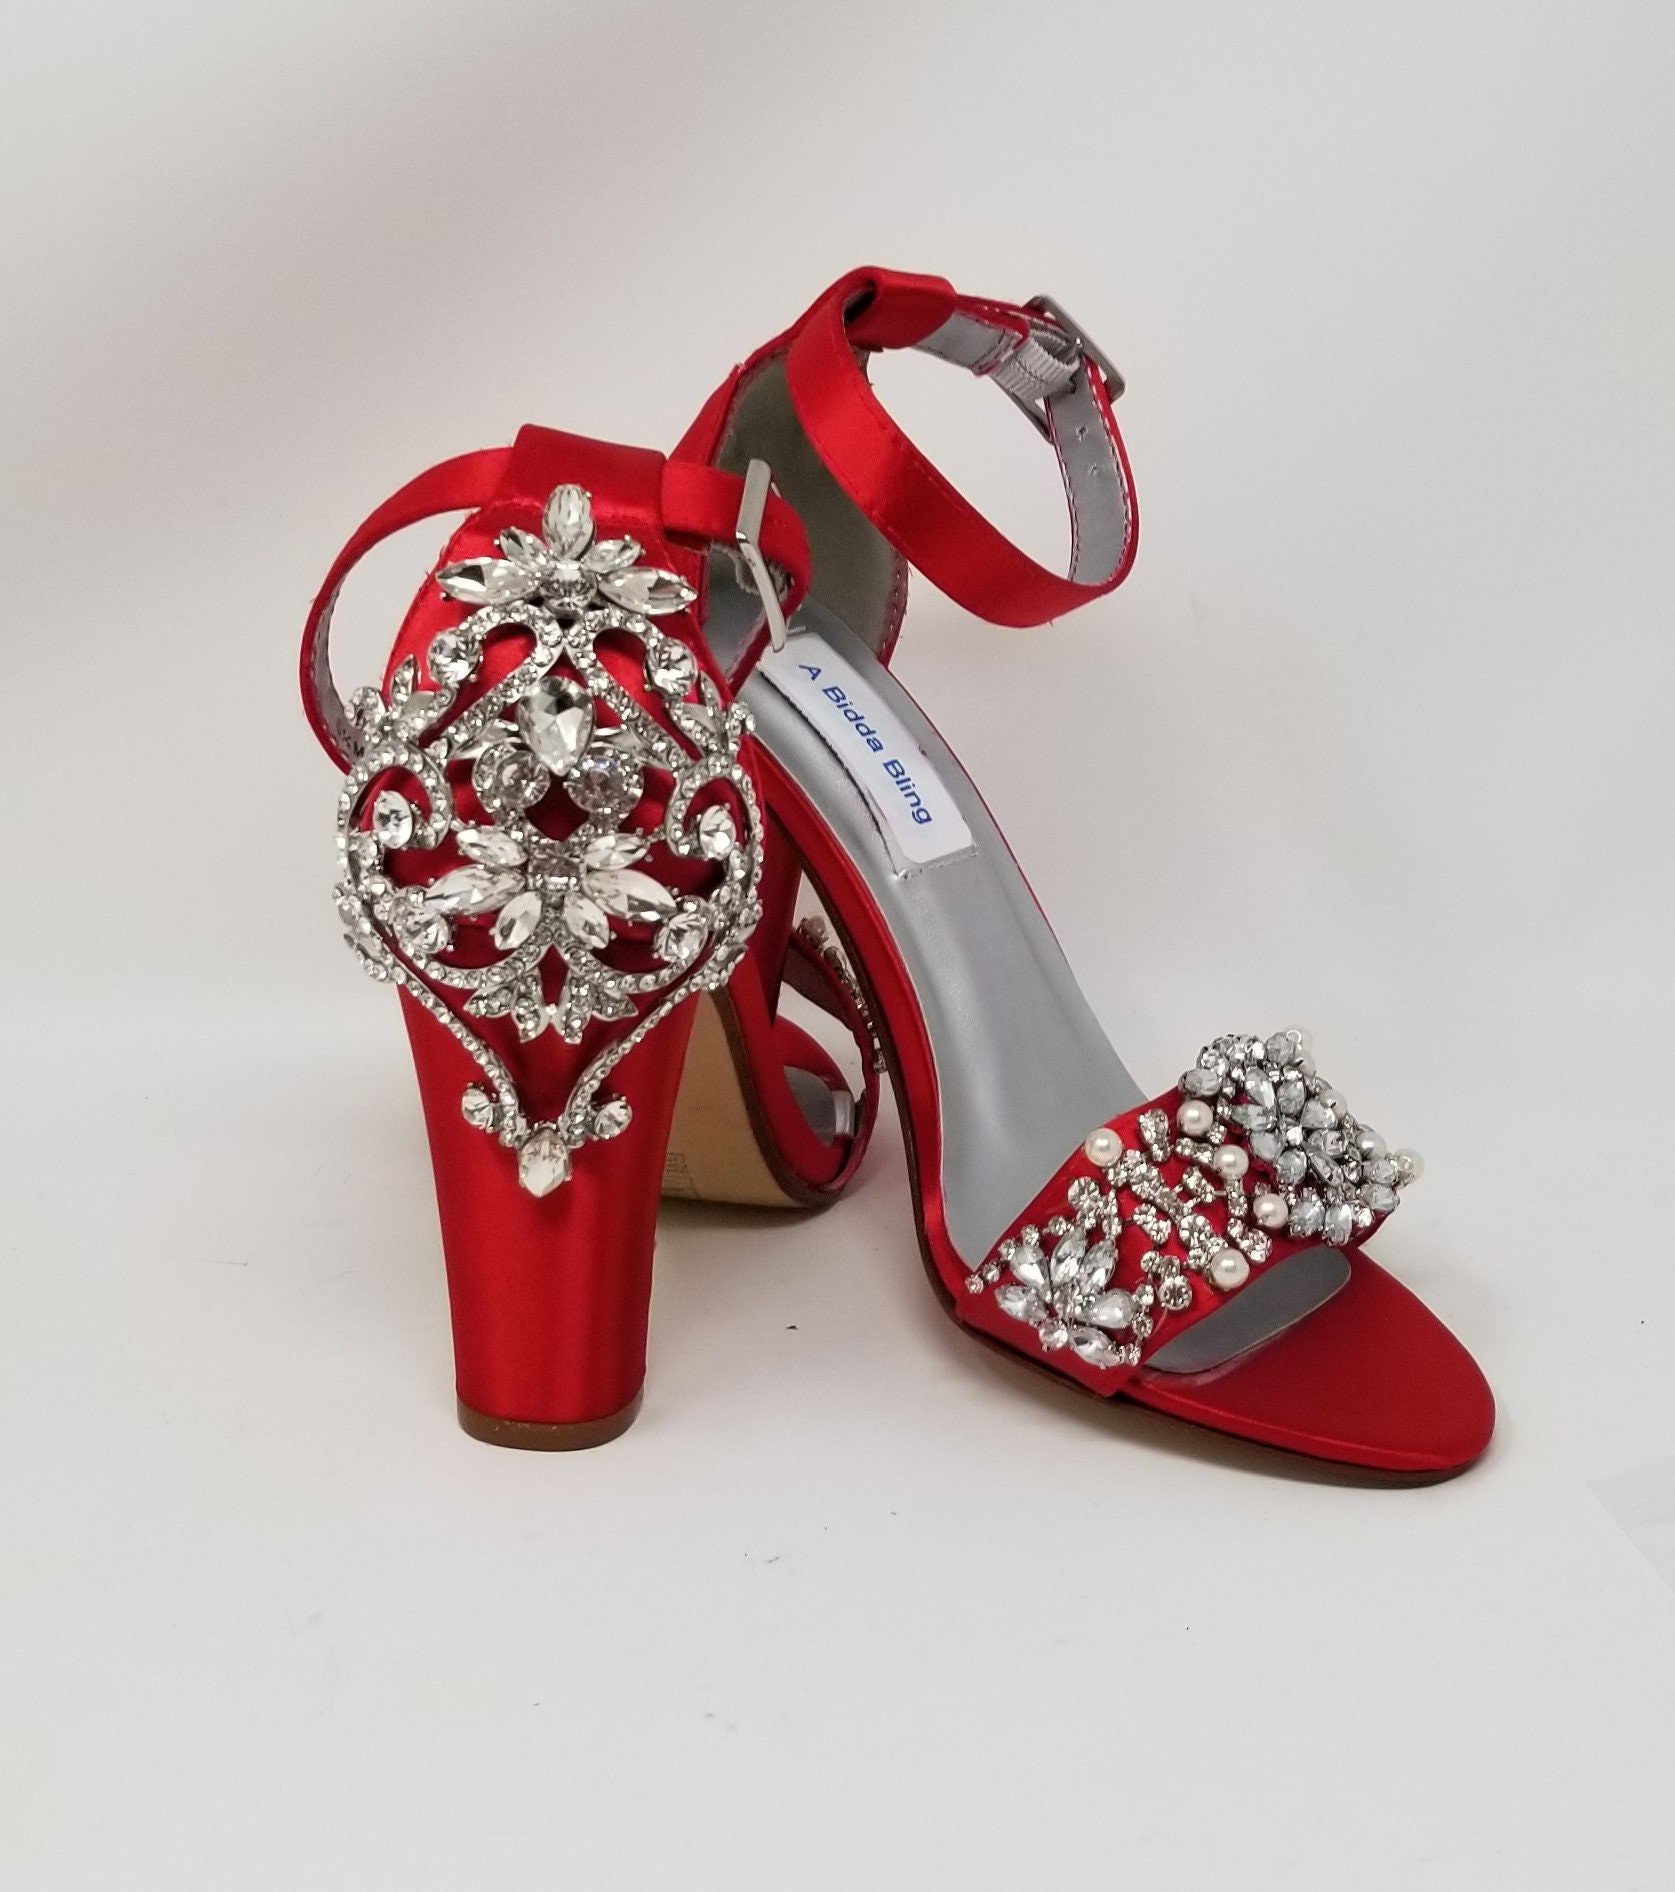 Wedding Slippers For Ladies Sale Online - www.bridgepartnersllc.com  1692850514